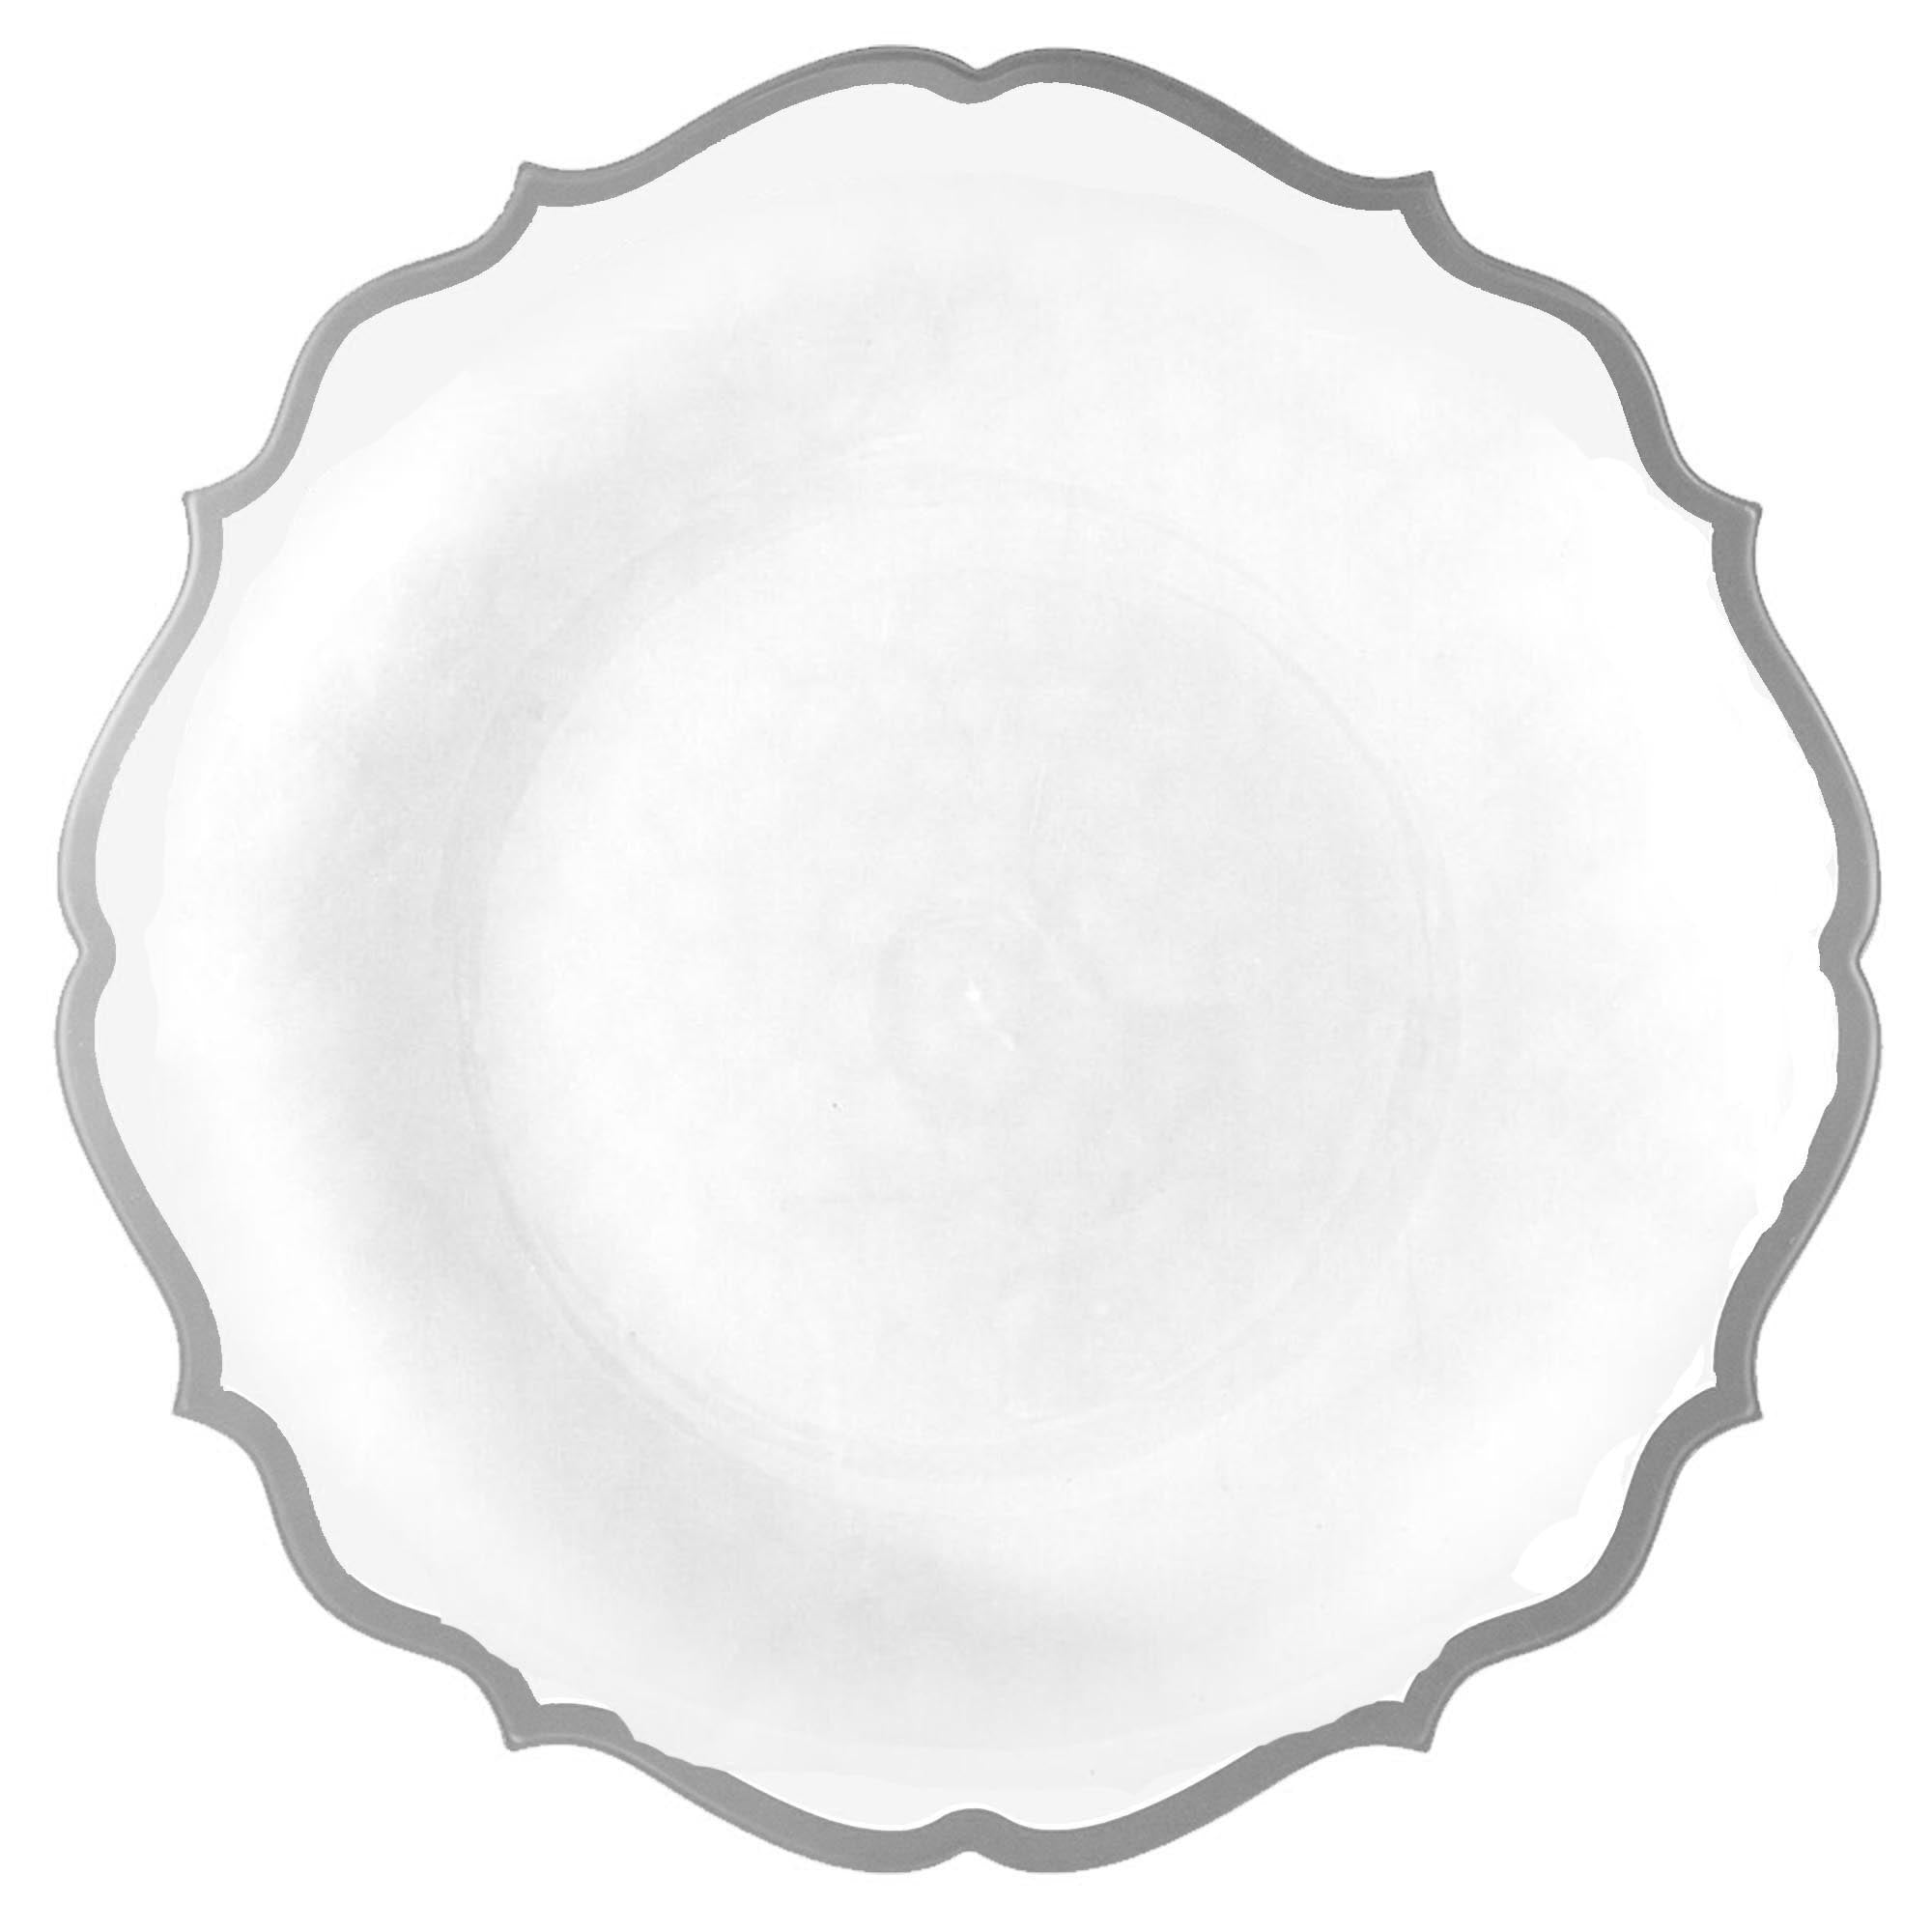 Disposable Fancy White Plastic Plates Silver Rim Contemporary Collection